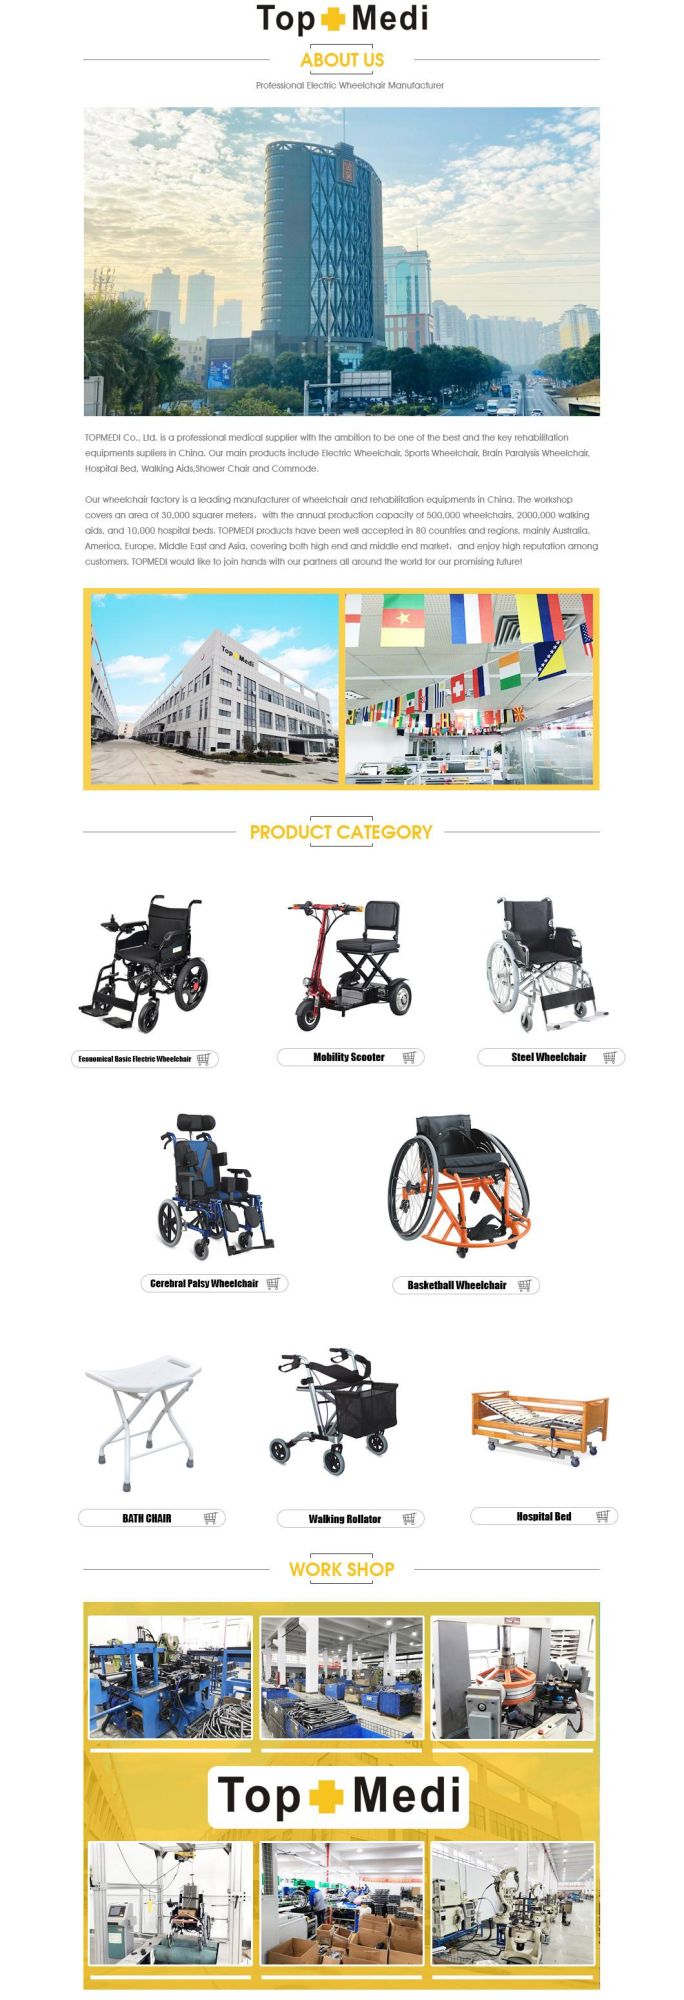 Foshang Hot Sell Aluminum Frame Comfort Wheelchair